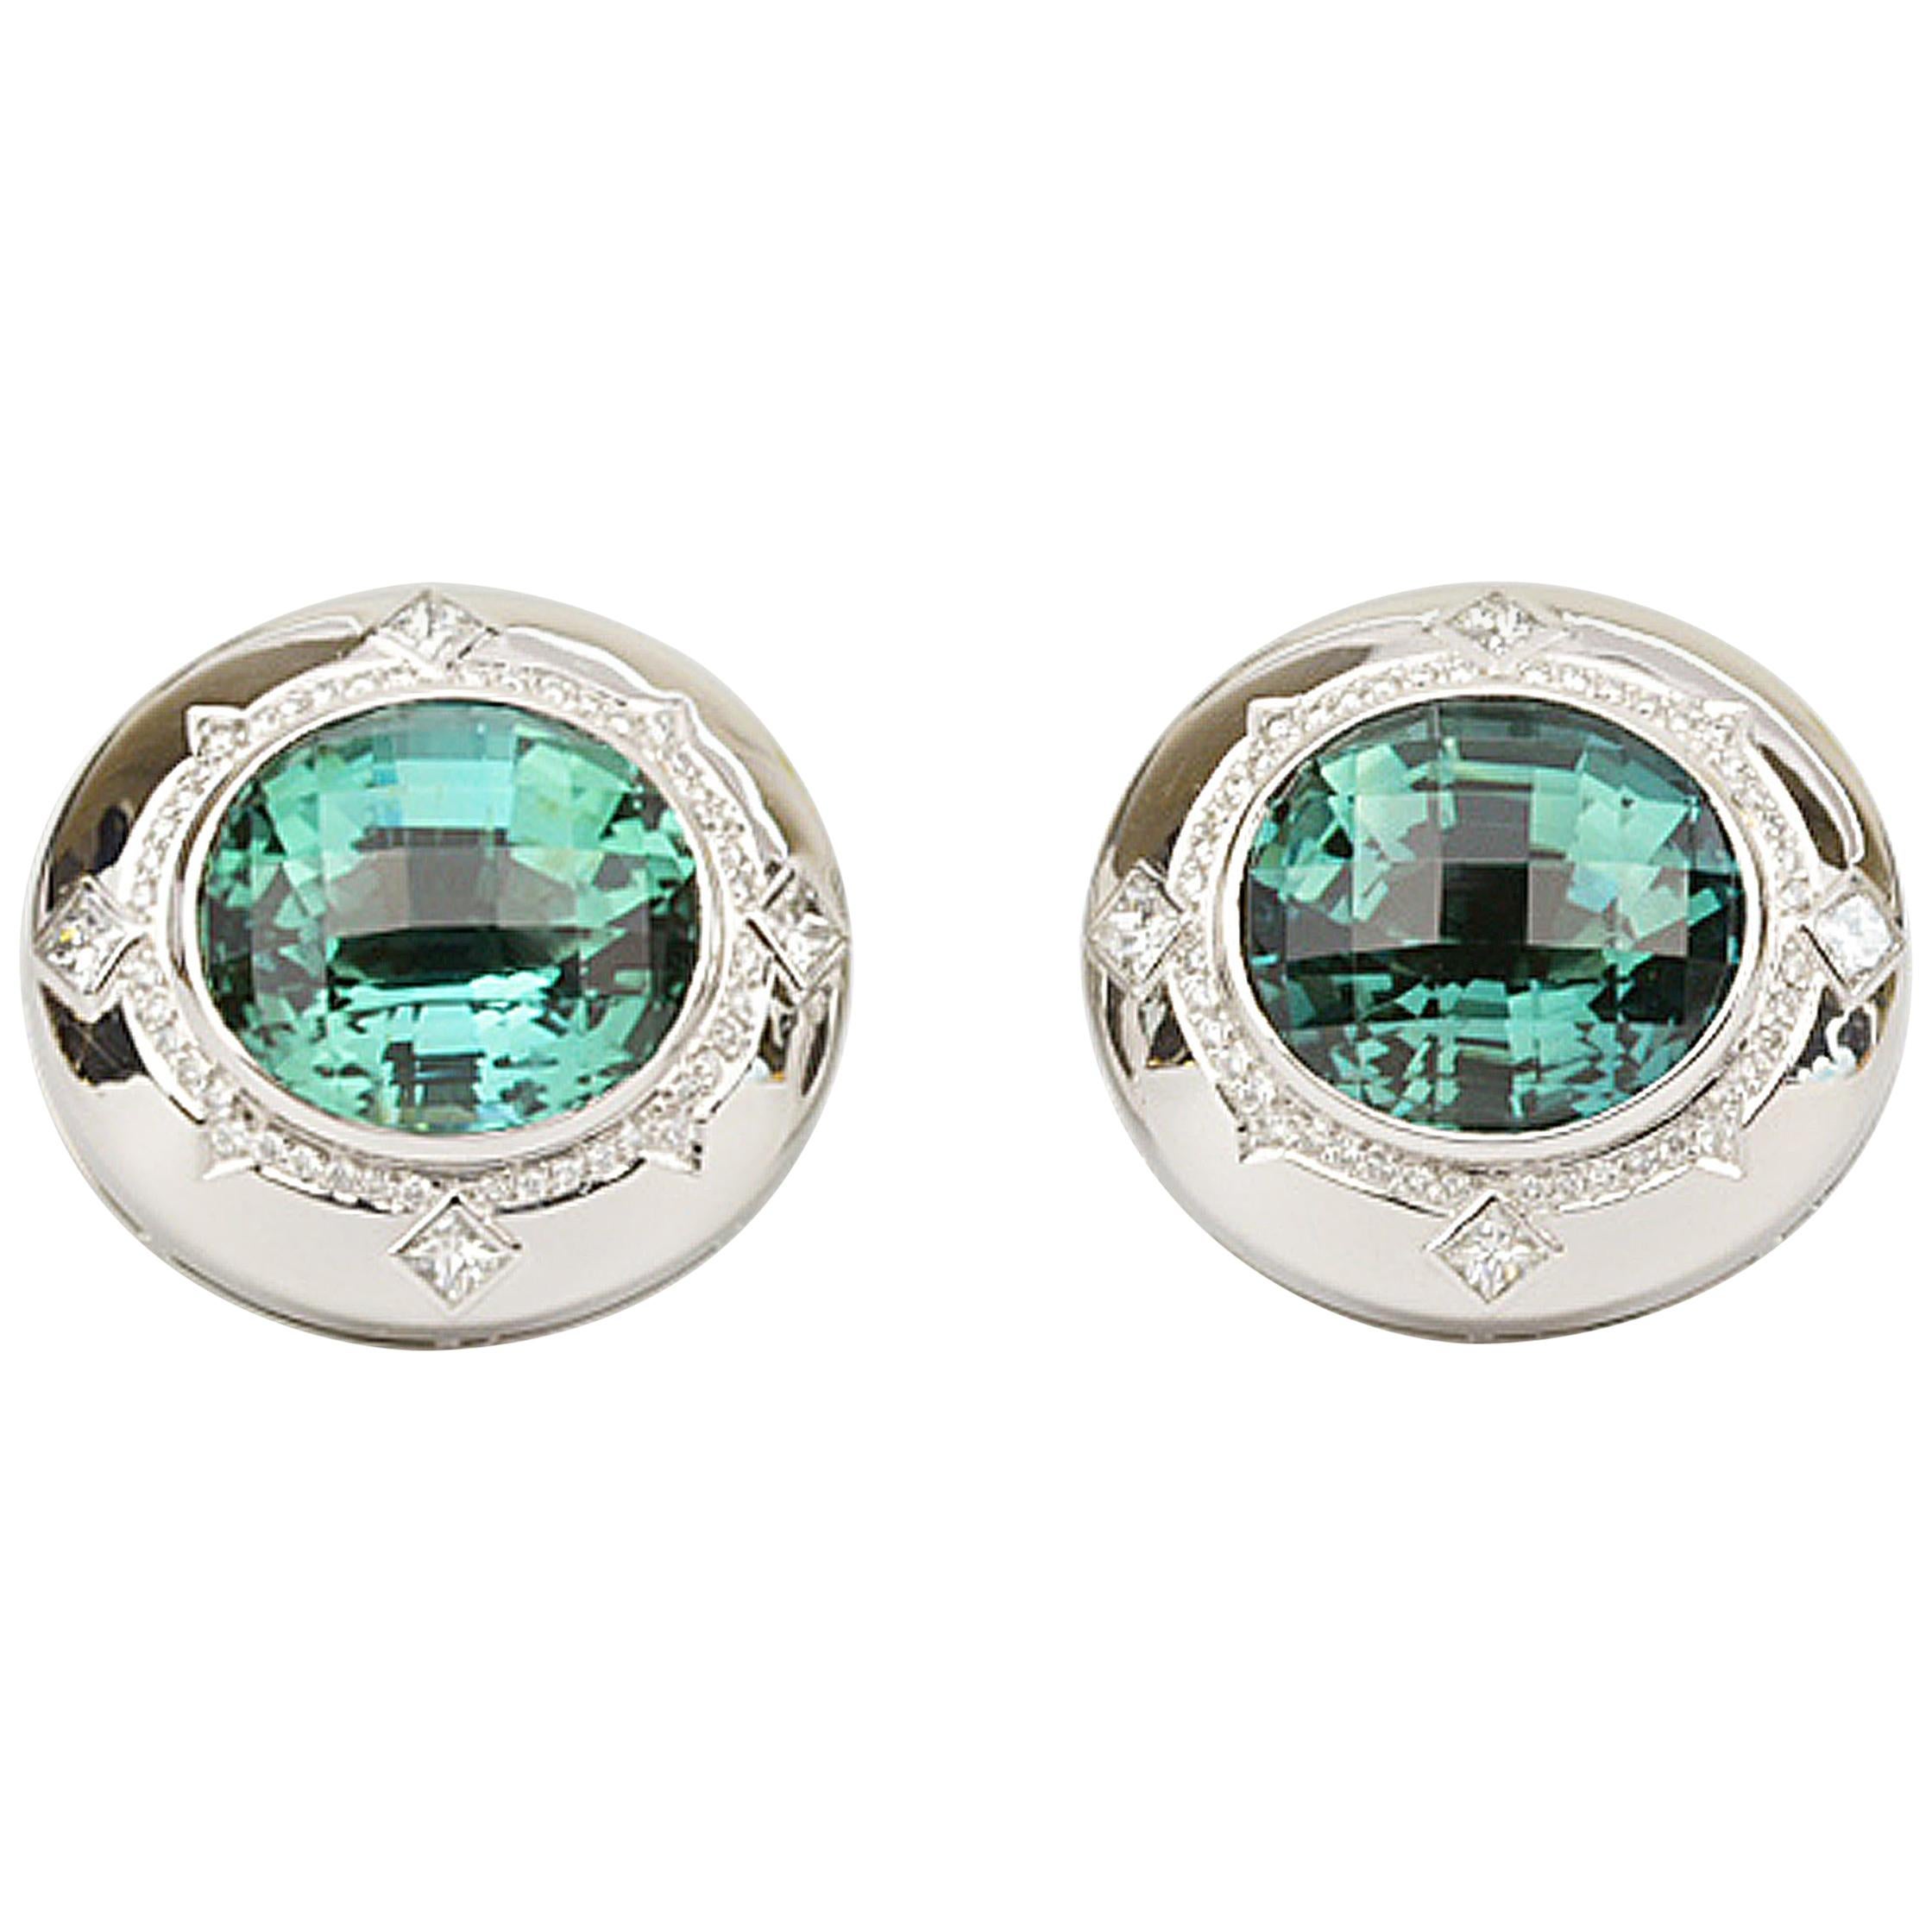 Matthew Cambery 18k White Gold 14.74 Ct Blue Green Tourmaline Diamond Cufflinks